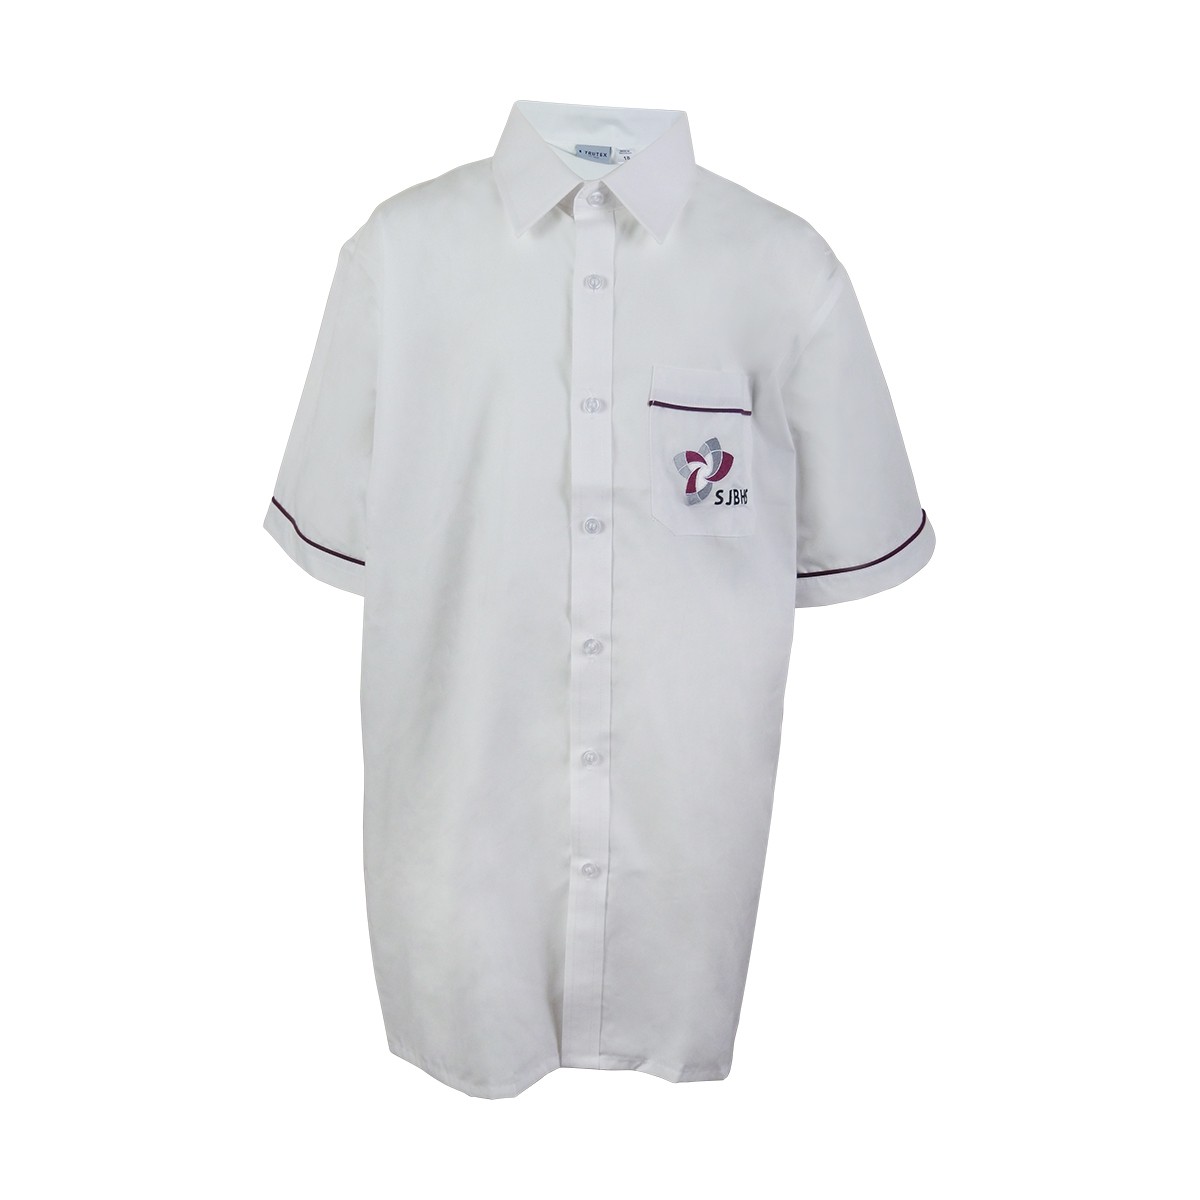 Senior Shirt White - School Locker